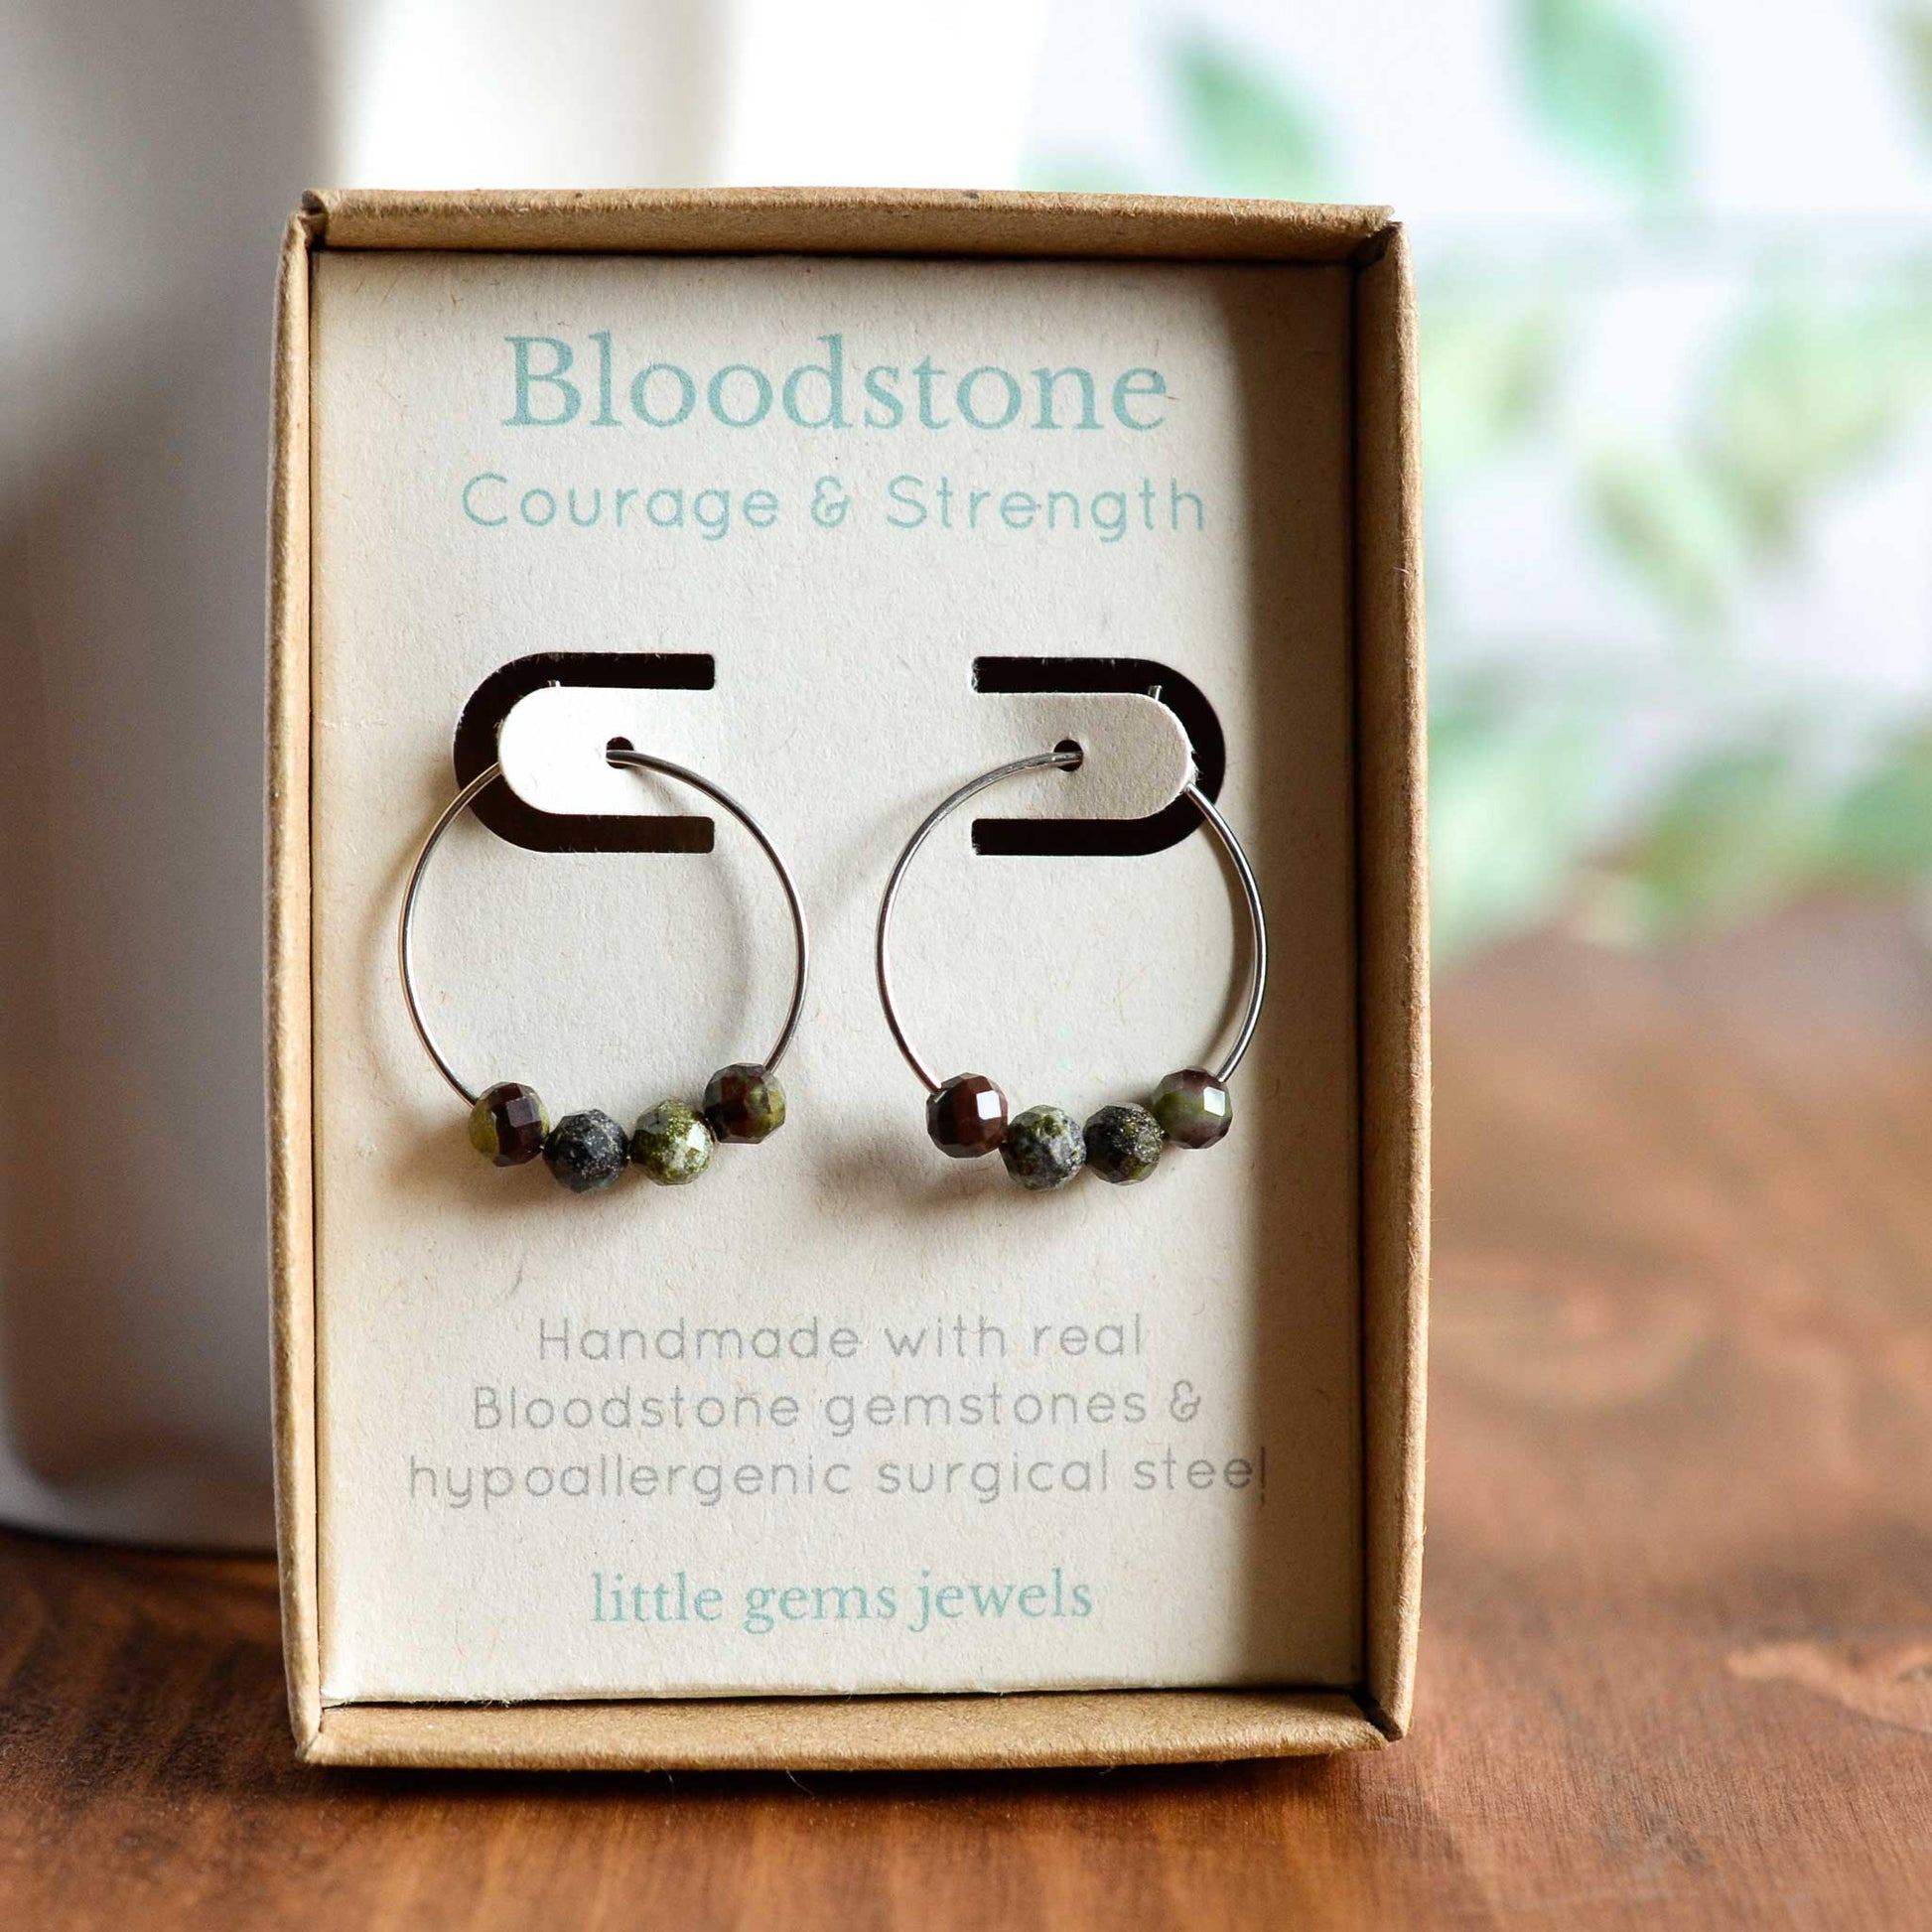 Bloodstone hoop earrings in eco friendly gift box